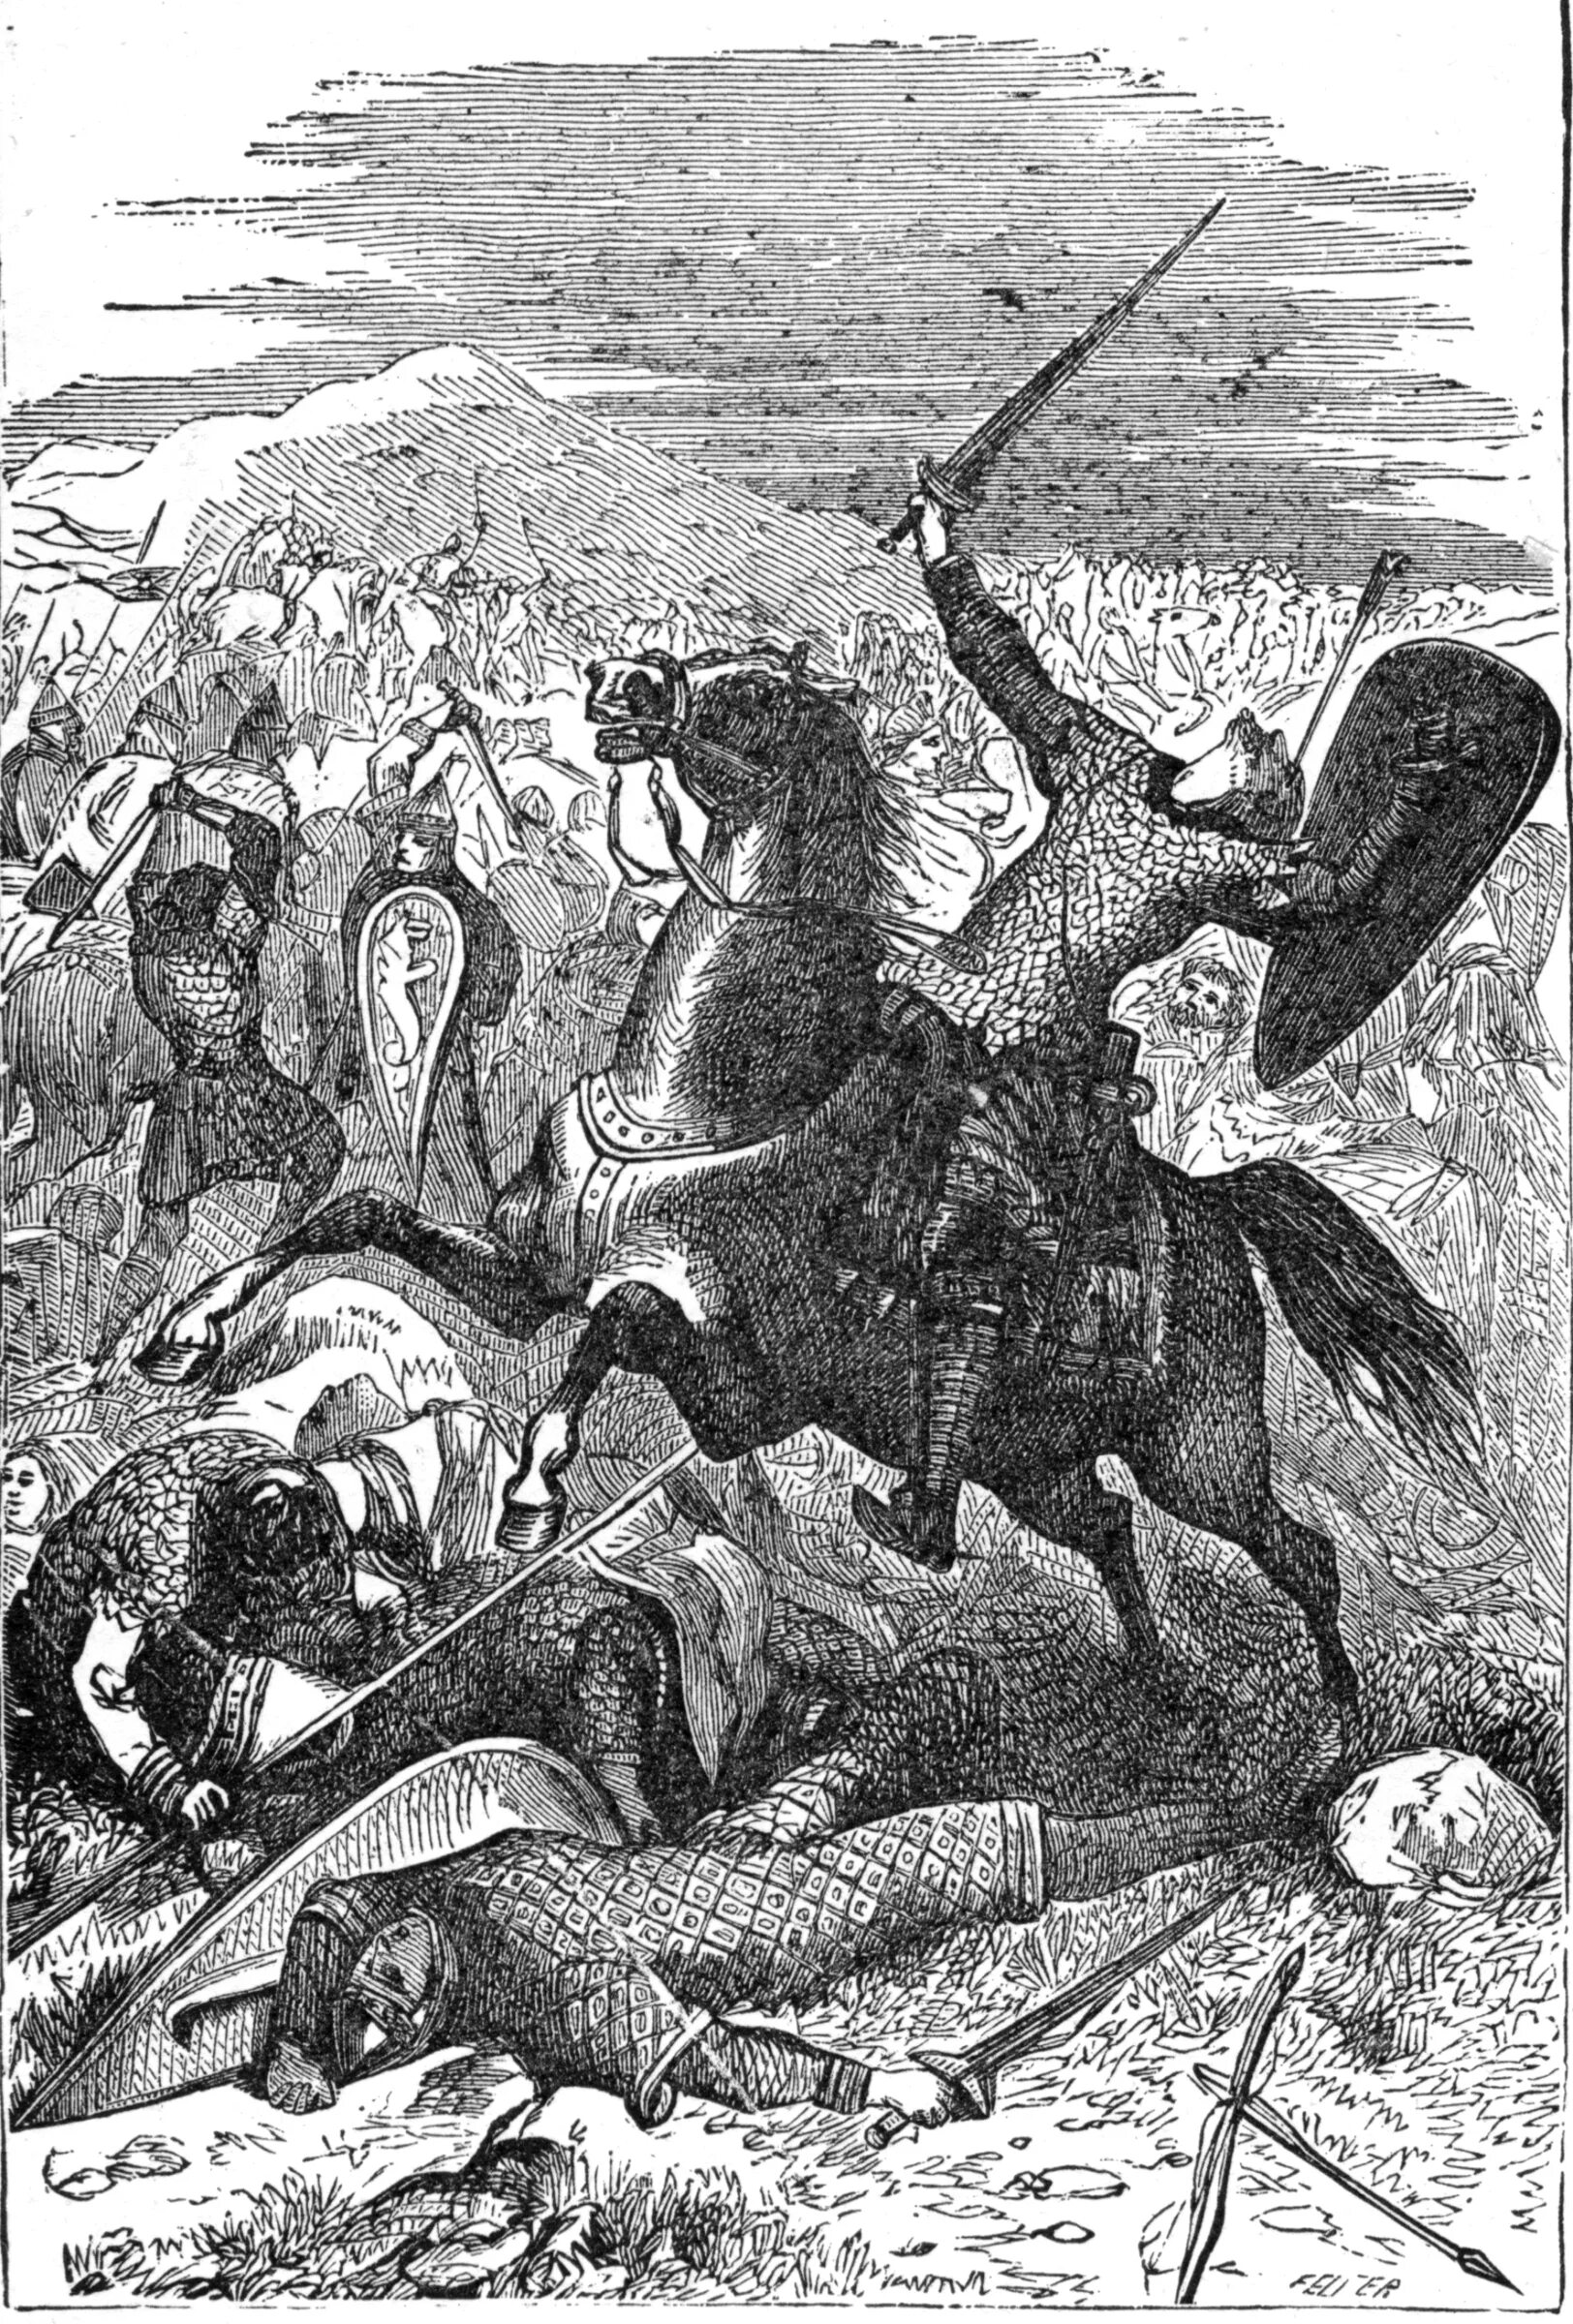 Битва при Гастингсе (1066 г. н.э.). Битва при Гастингсе 1066. Гарольд битва при Гастингсе. Битва при гастингсе год